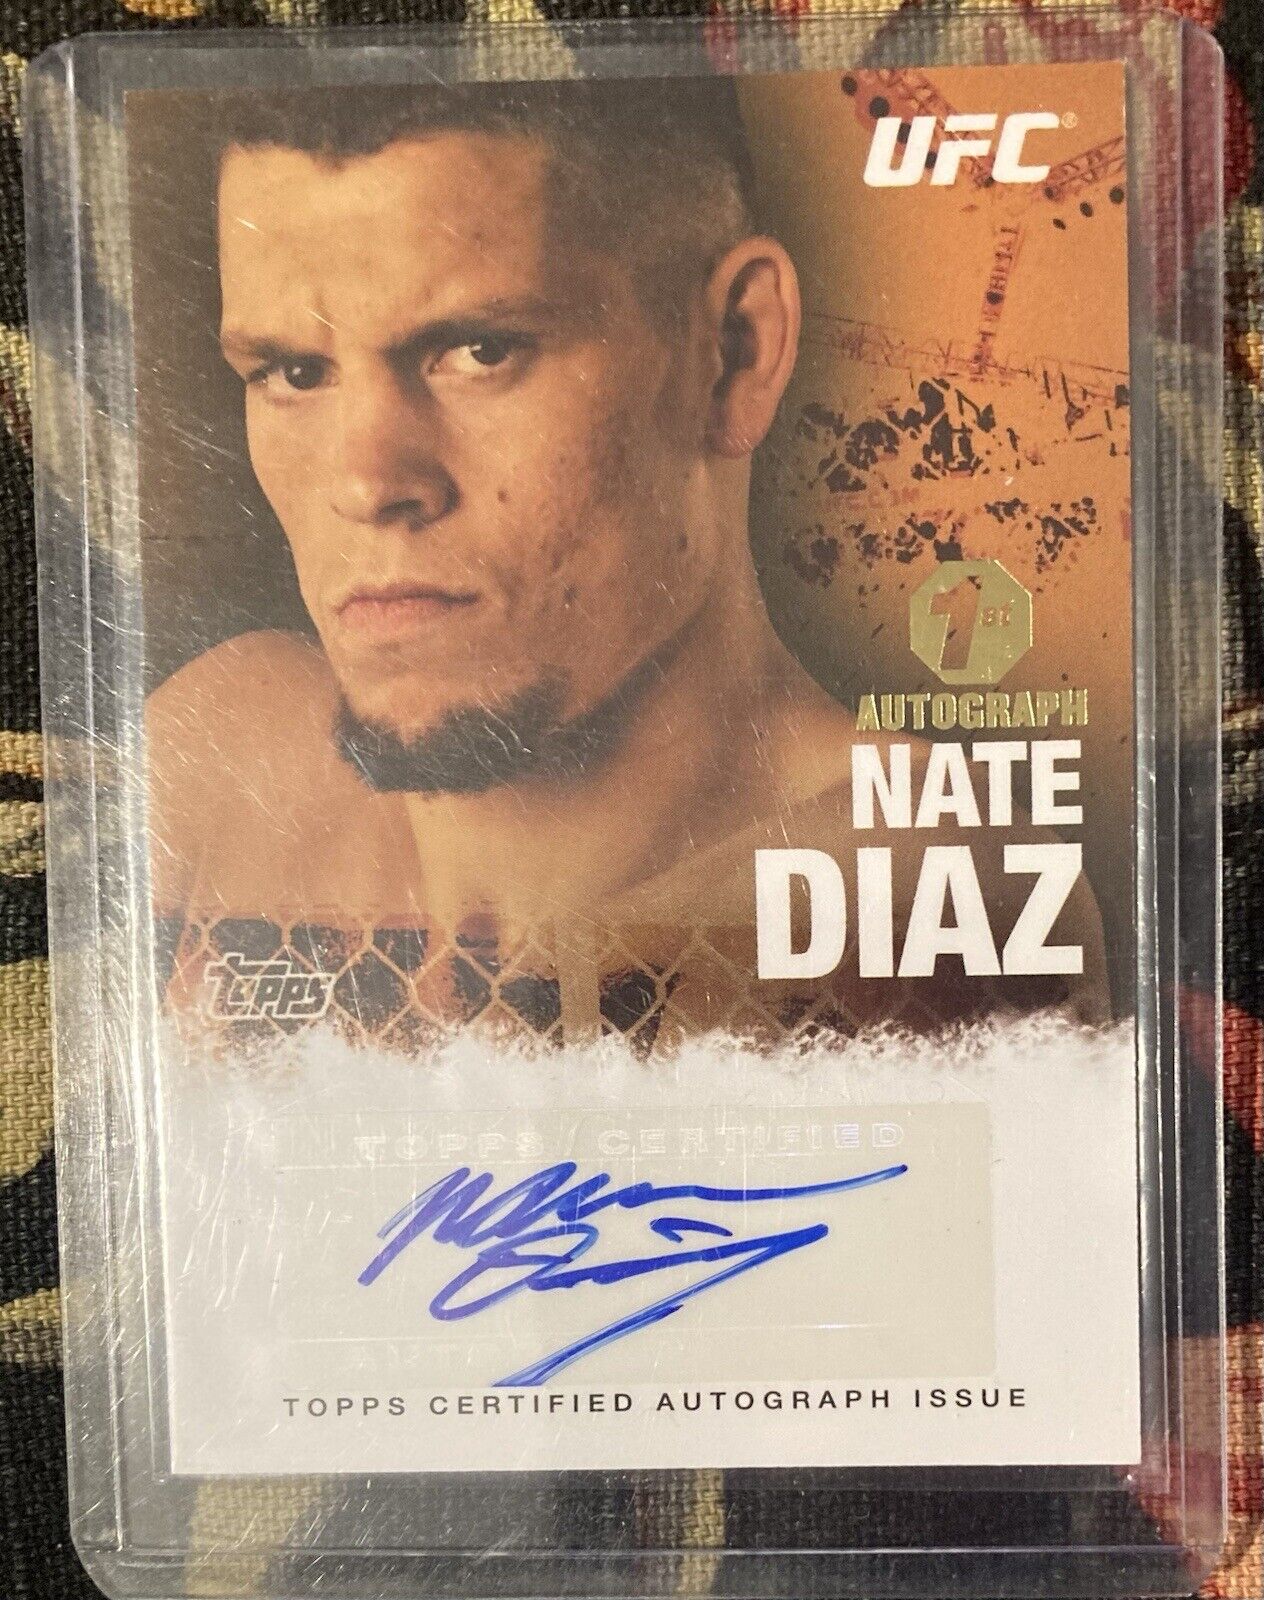 2010 Topps UFC Nate Diaz 1st Autograph Rookie Card Debut.